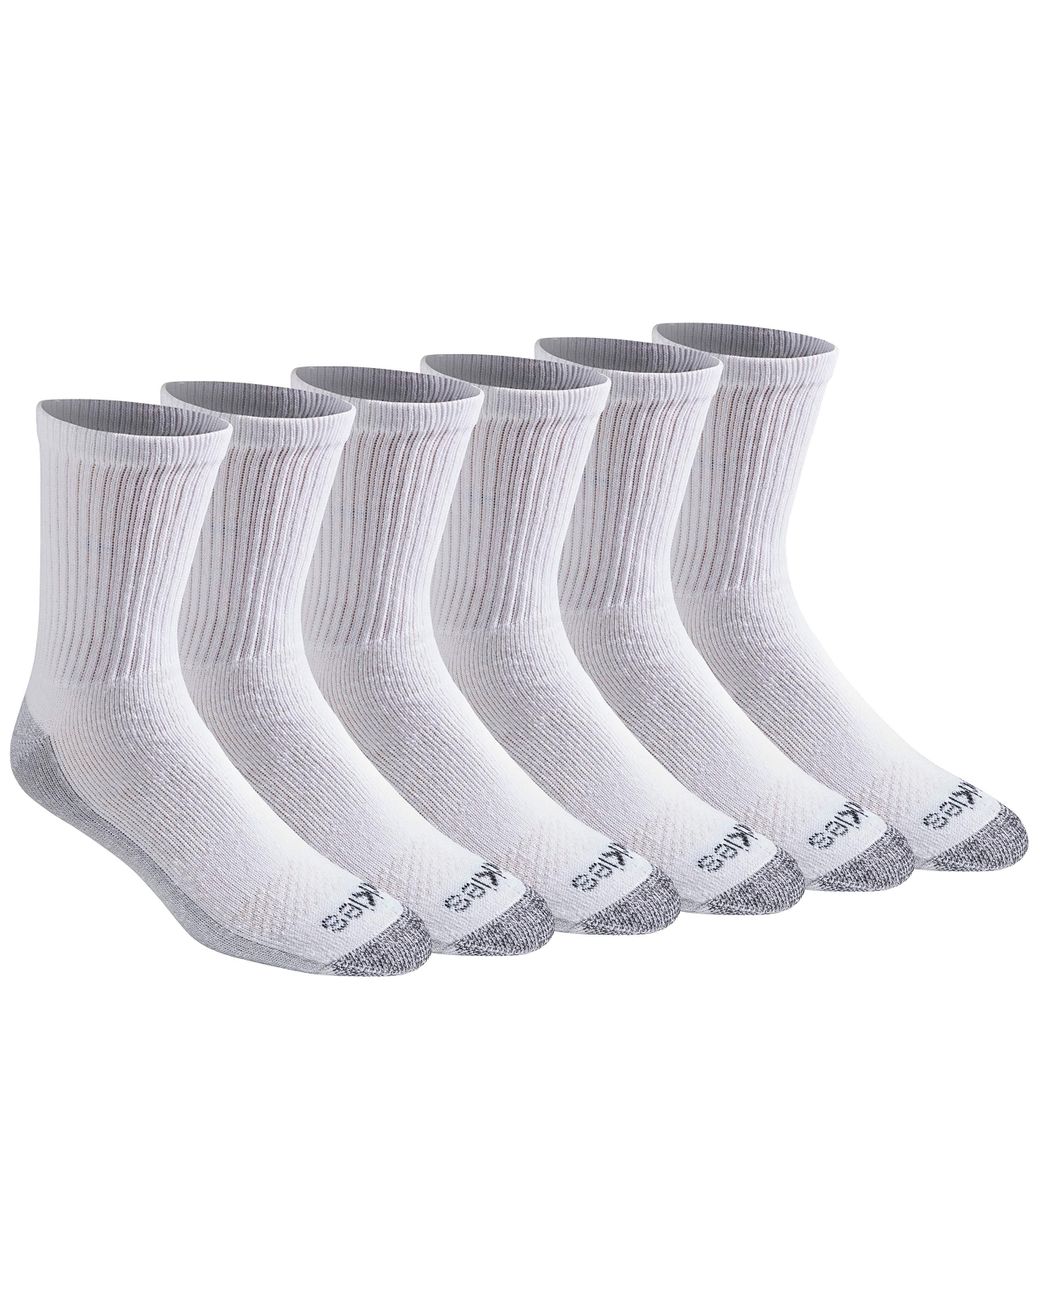 Dickies Dri-tech Moisture Control Mid-crew Socks in White for Men - Lyst